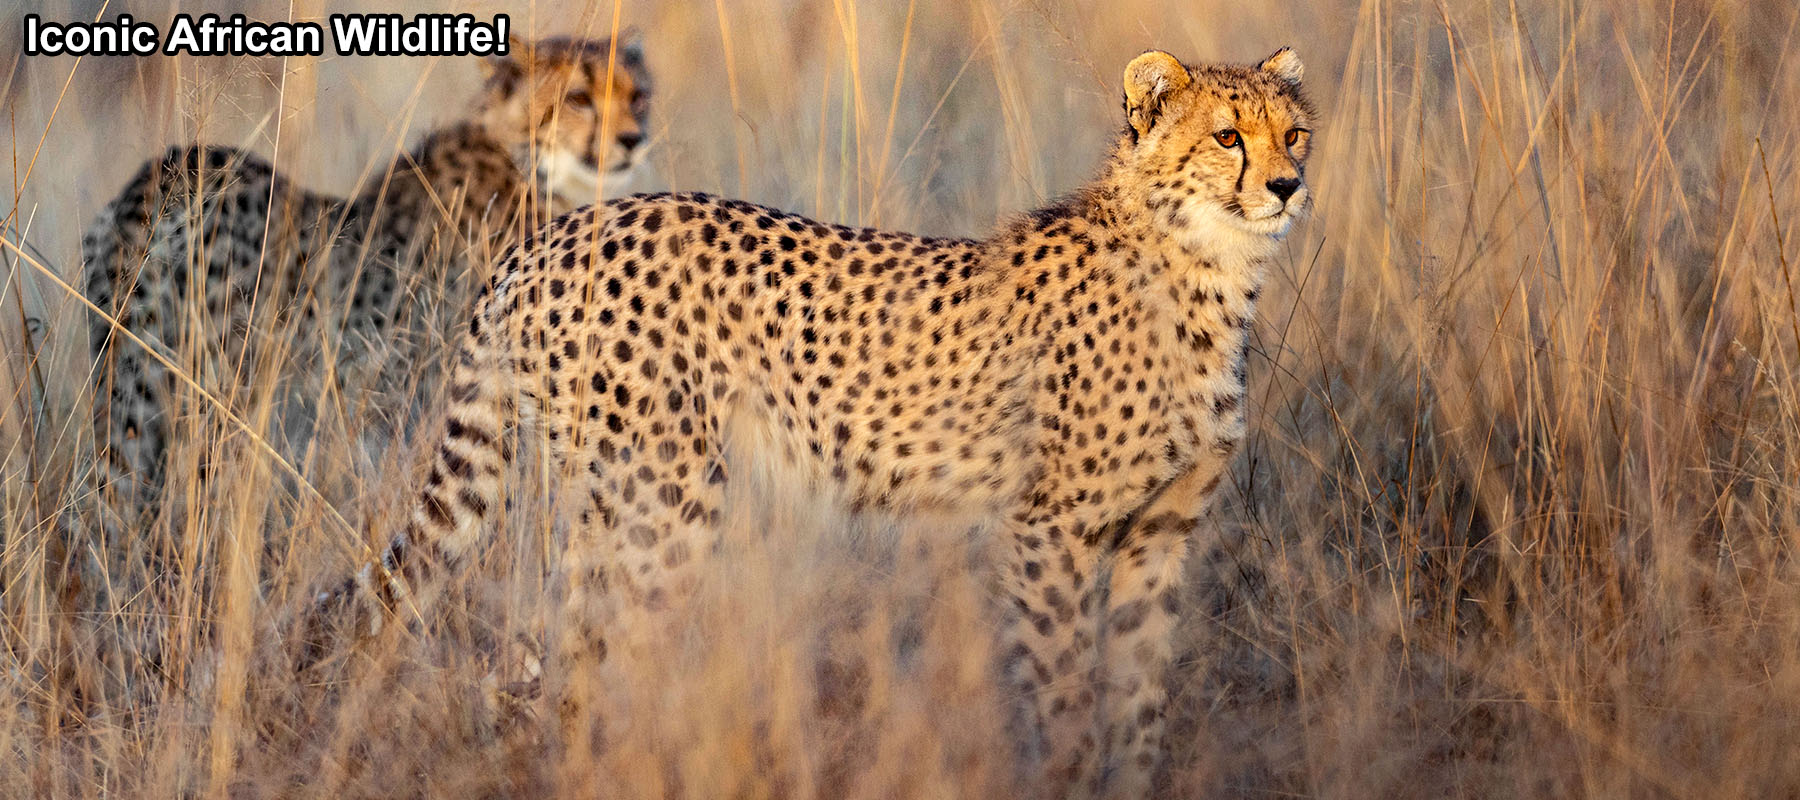 Endangered African cheetahs on the Serengeti and Masai Mara savanna photographed on a wildlife photo safari in Kenya, Tanzania, South Africa, Uganda